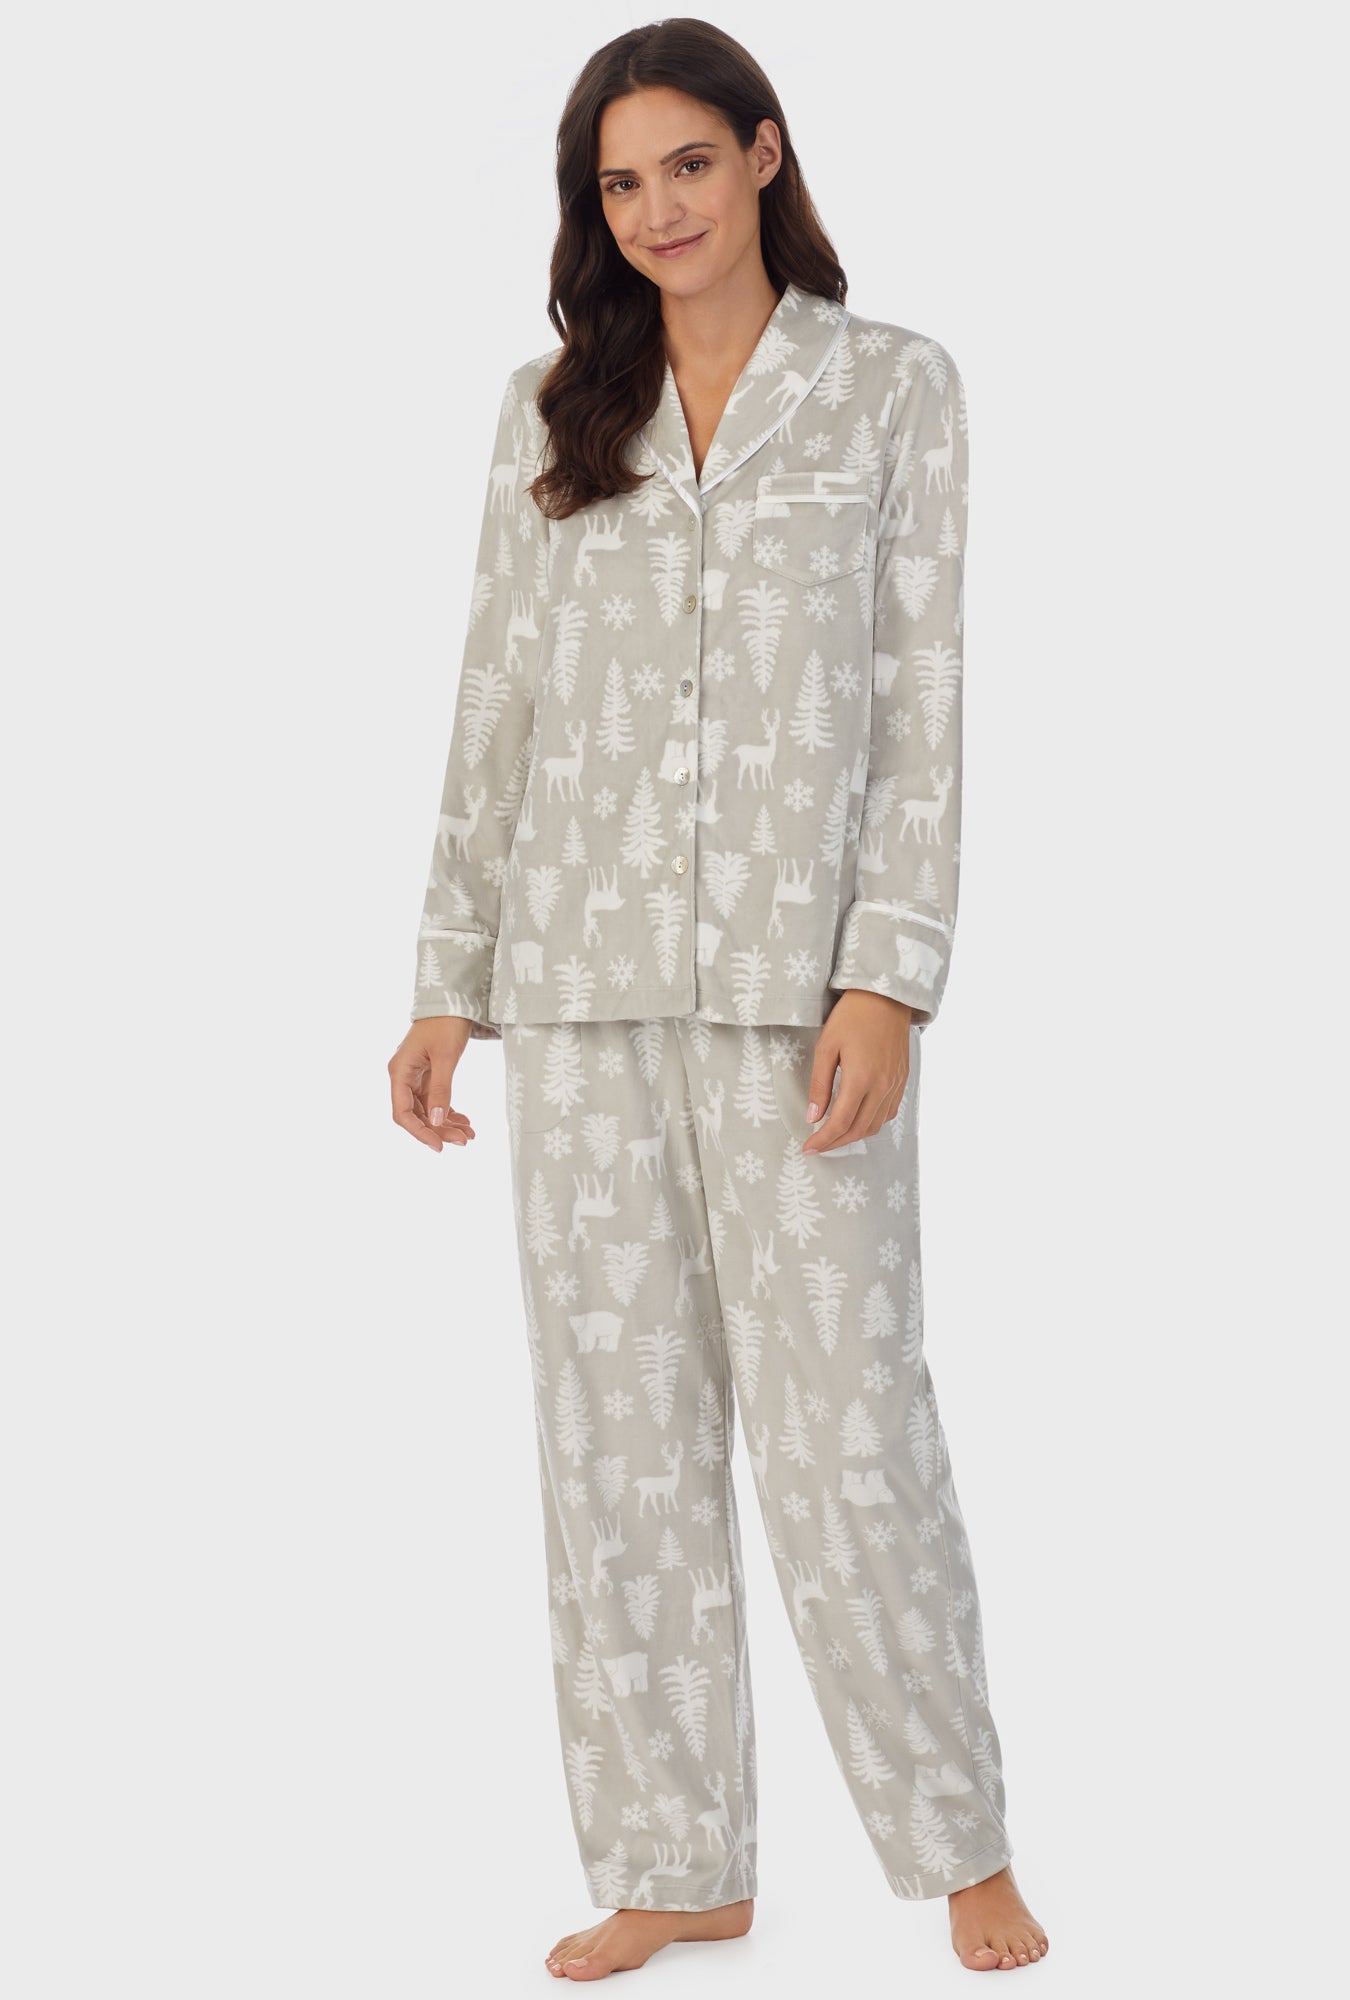 A lady wearing winter forest cozy fleece pajama